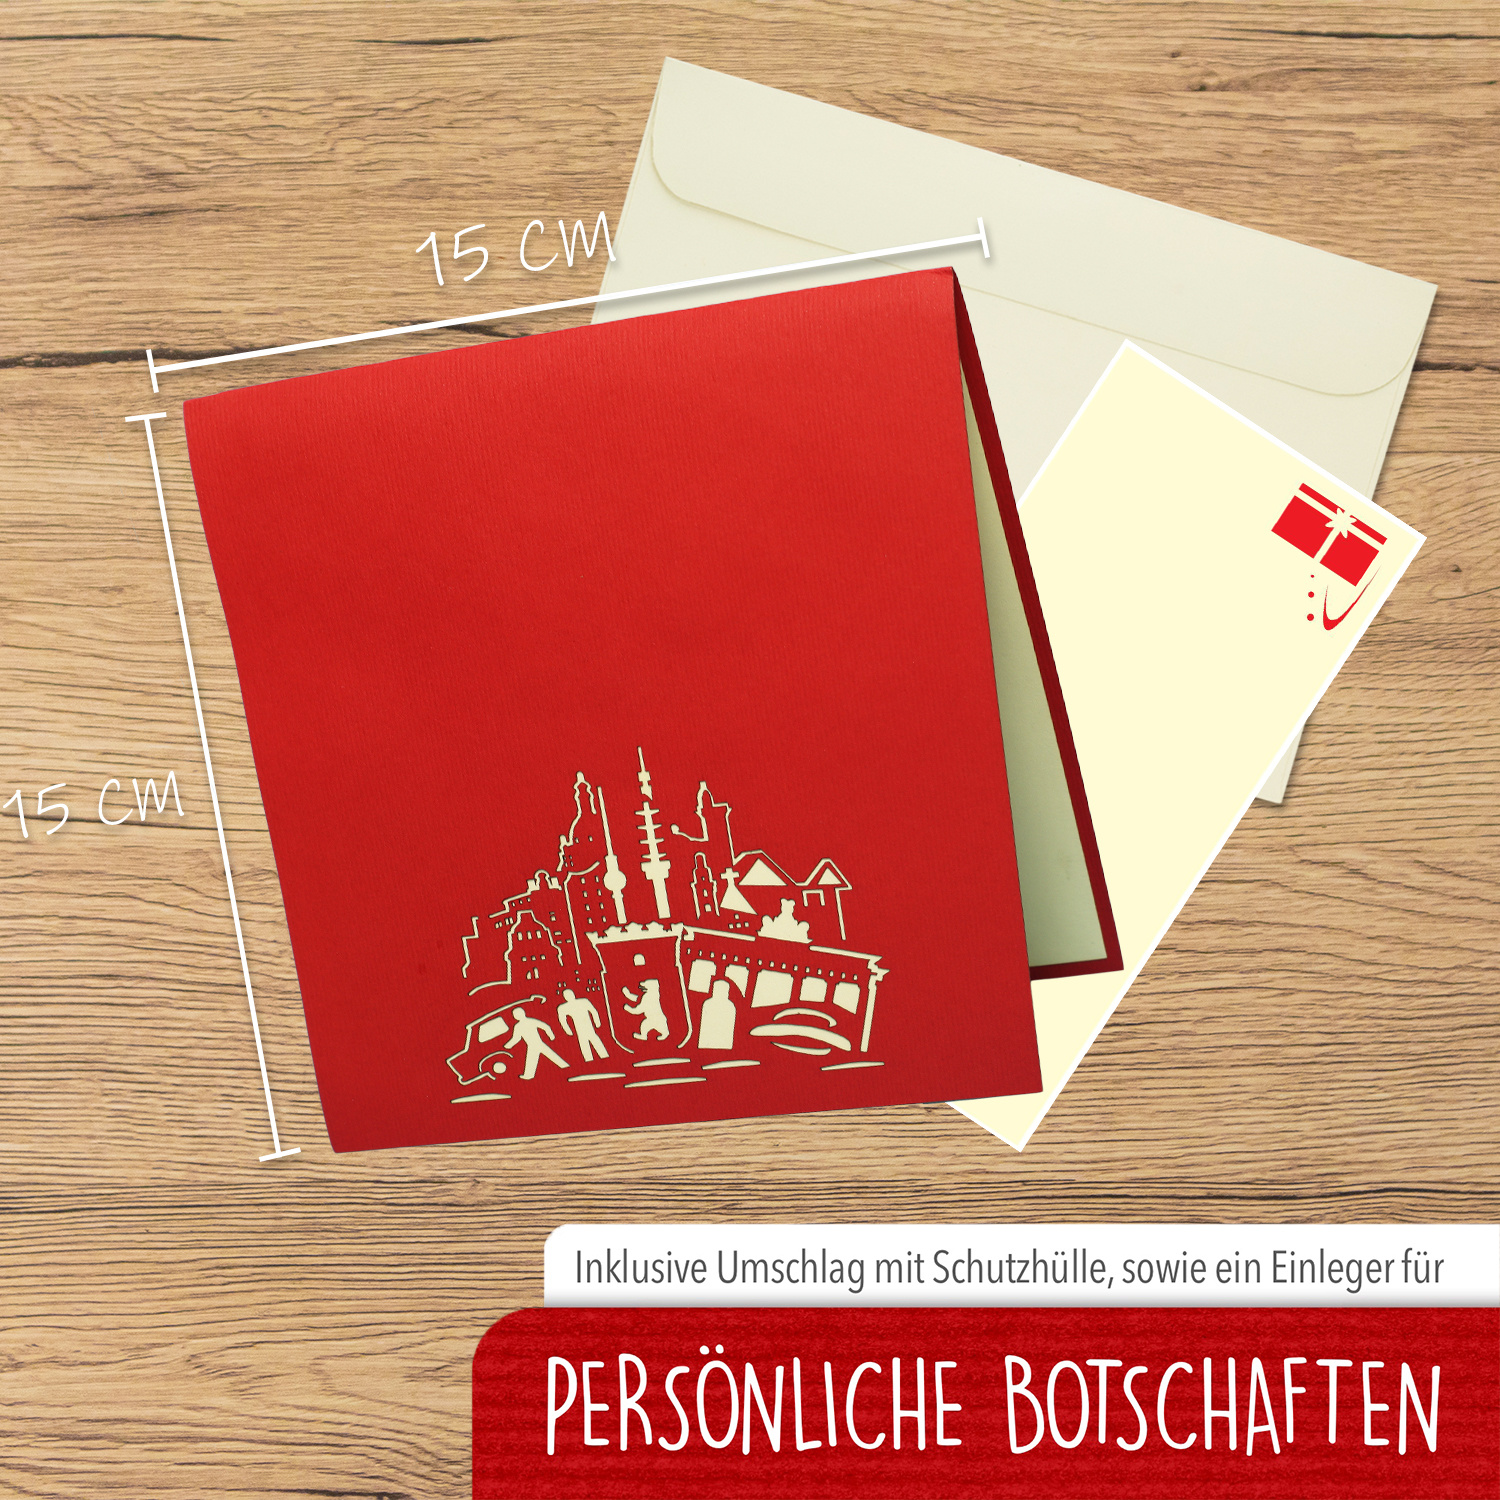 LINPOPUP Pop Up 3D Card, Berlin, Greeting Card, Travel Voucher, East Germany, LIN17219, LINPopUp®, N191